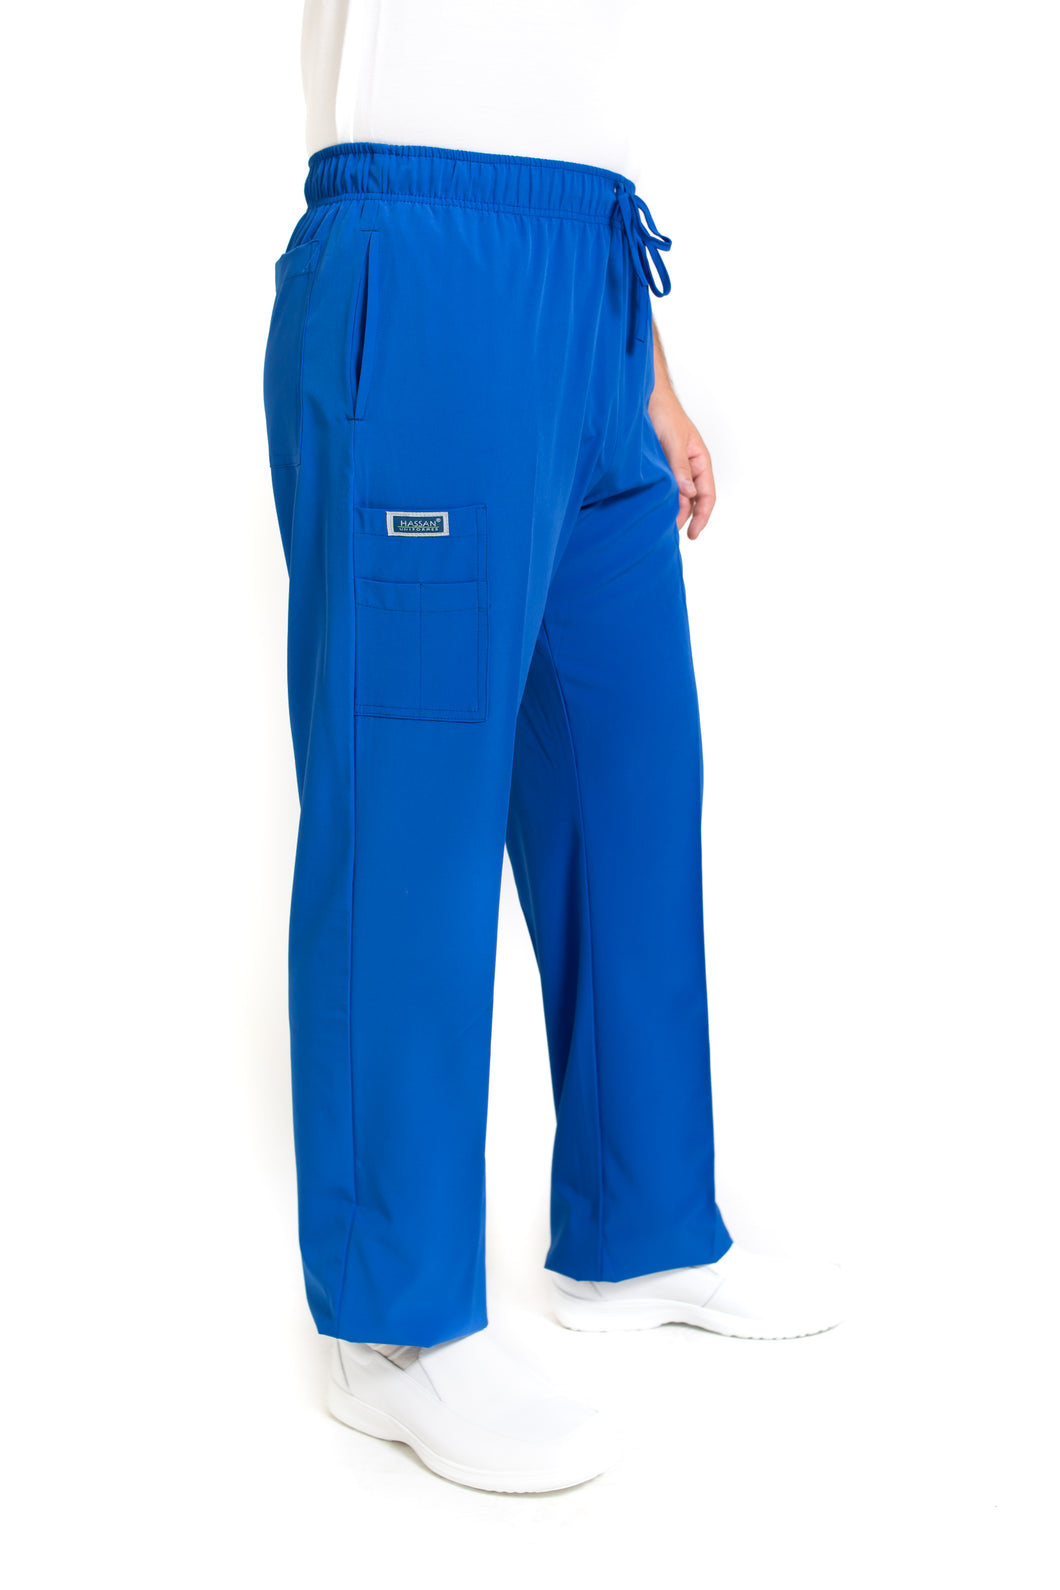 Pantalón Pant EA-02P REPELENTE A FLUIDOS-Color REY HOMBRE-HASSAN Uniformes